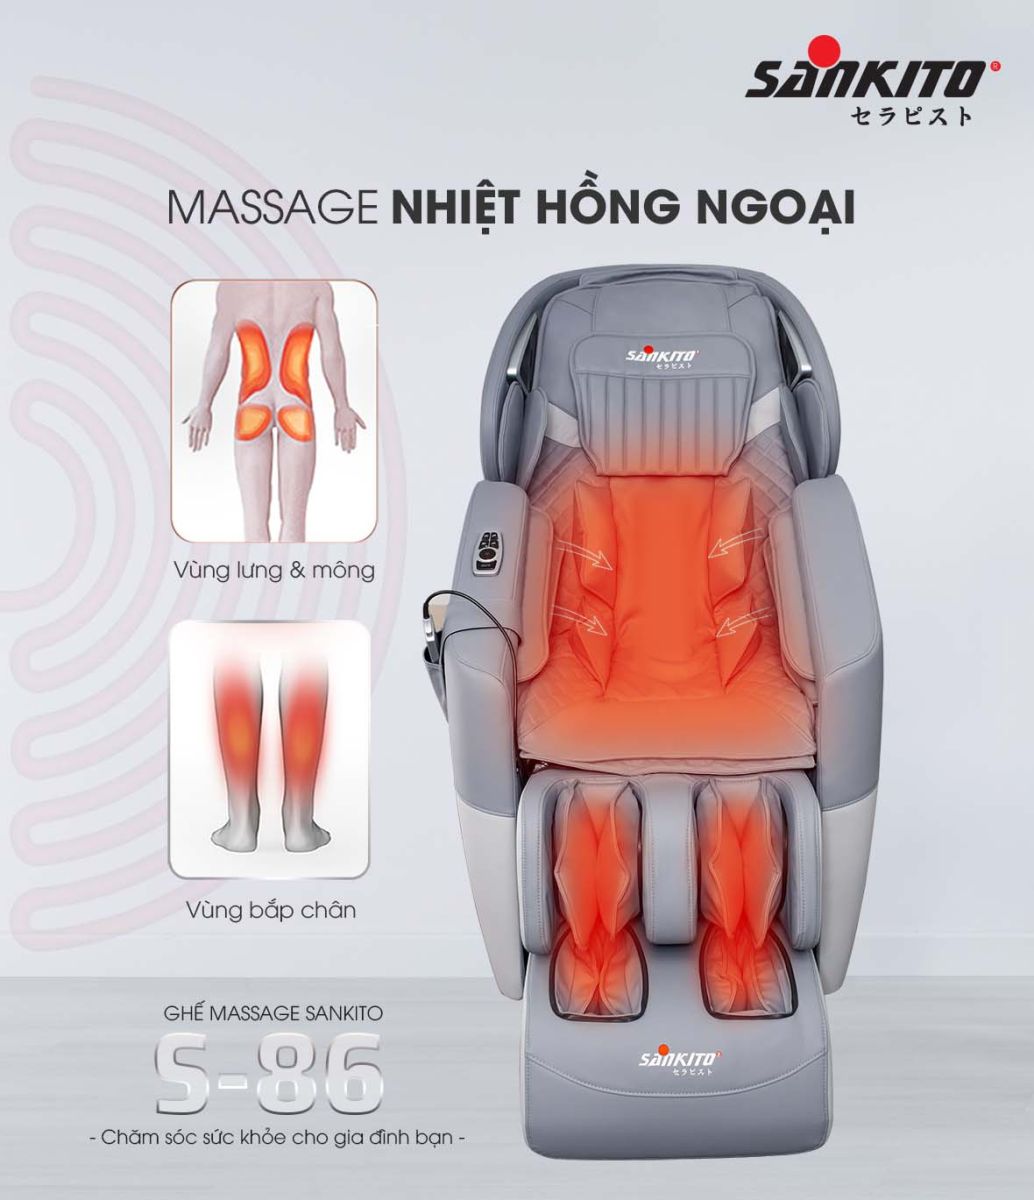 Ghế massage Sankito S-86 | Chườm nhiệt tia hồng ngoại